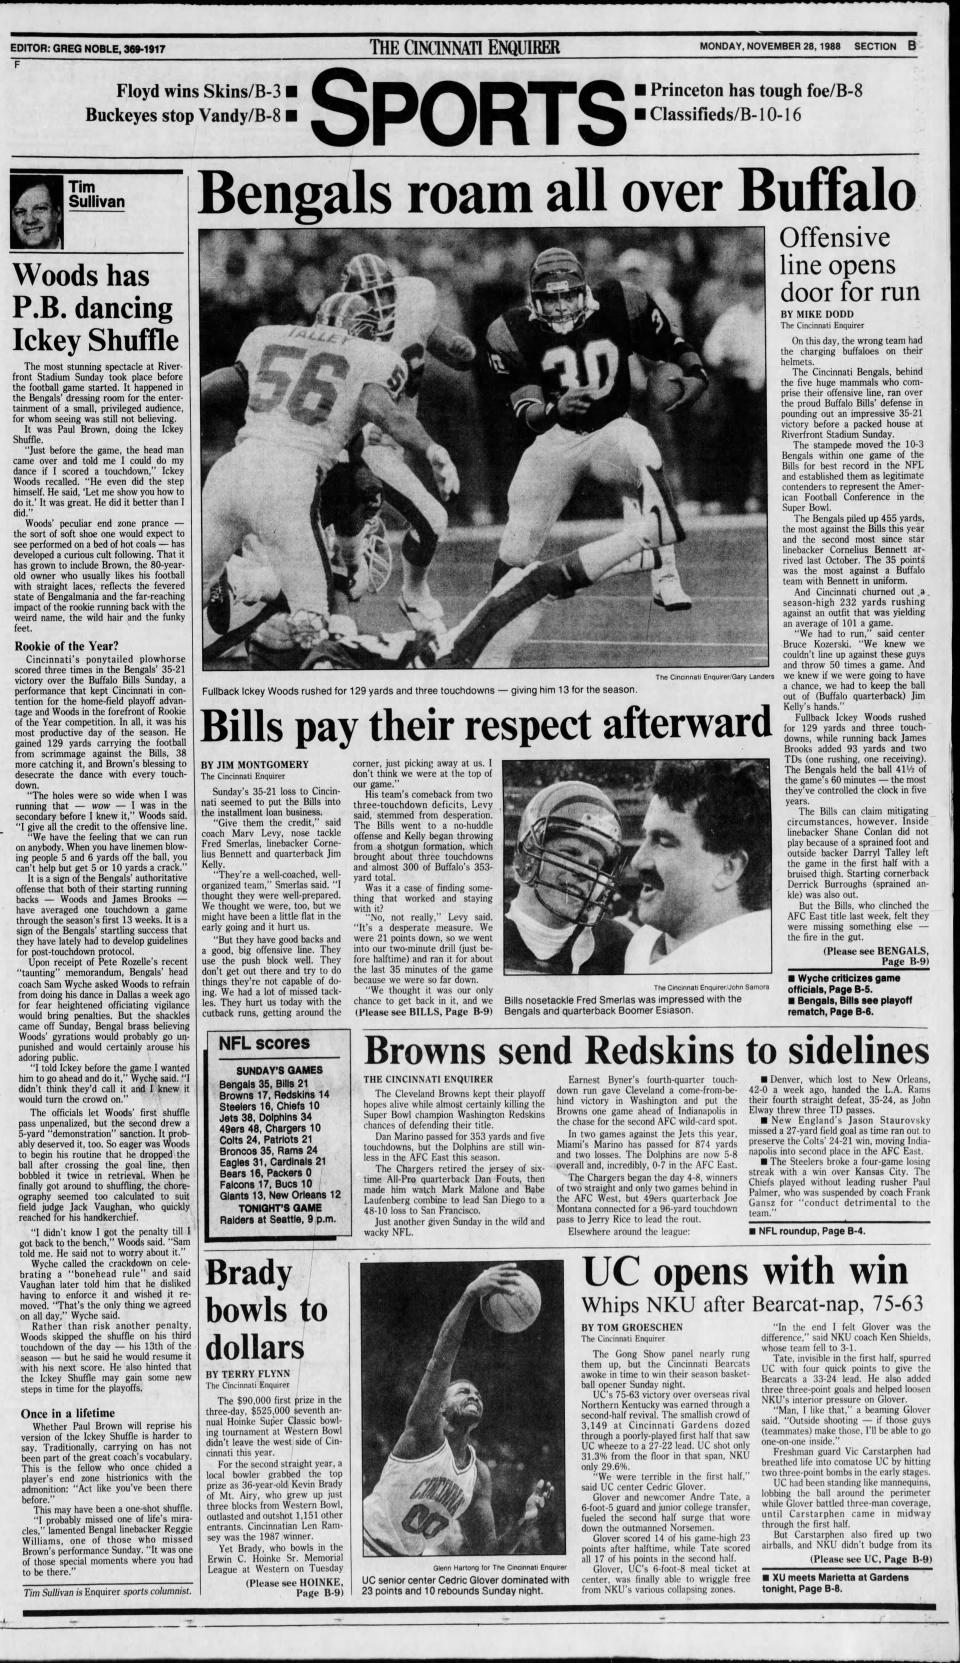 Nov. 28, 1988 Cincinnati Enquirer sports cover.